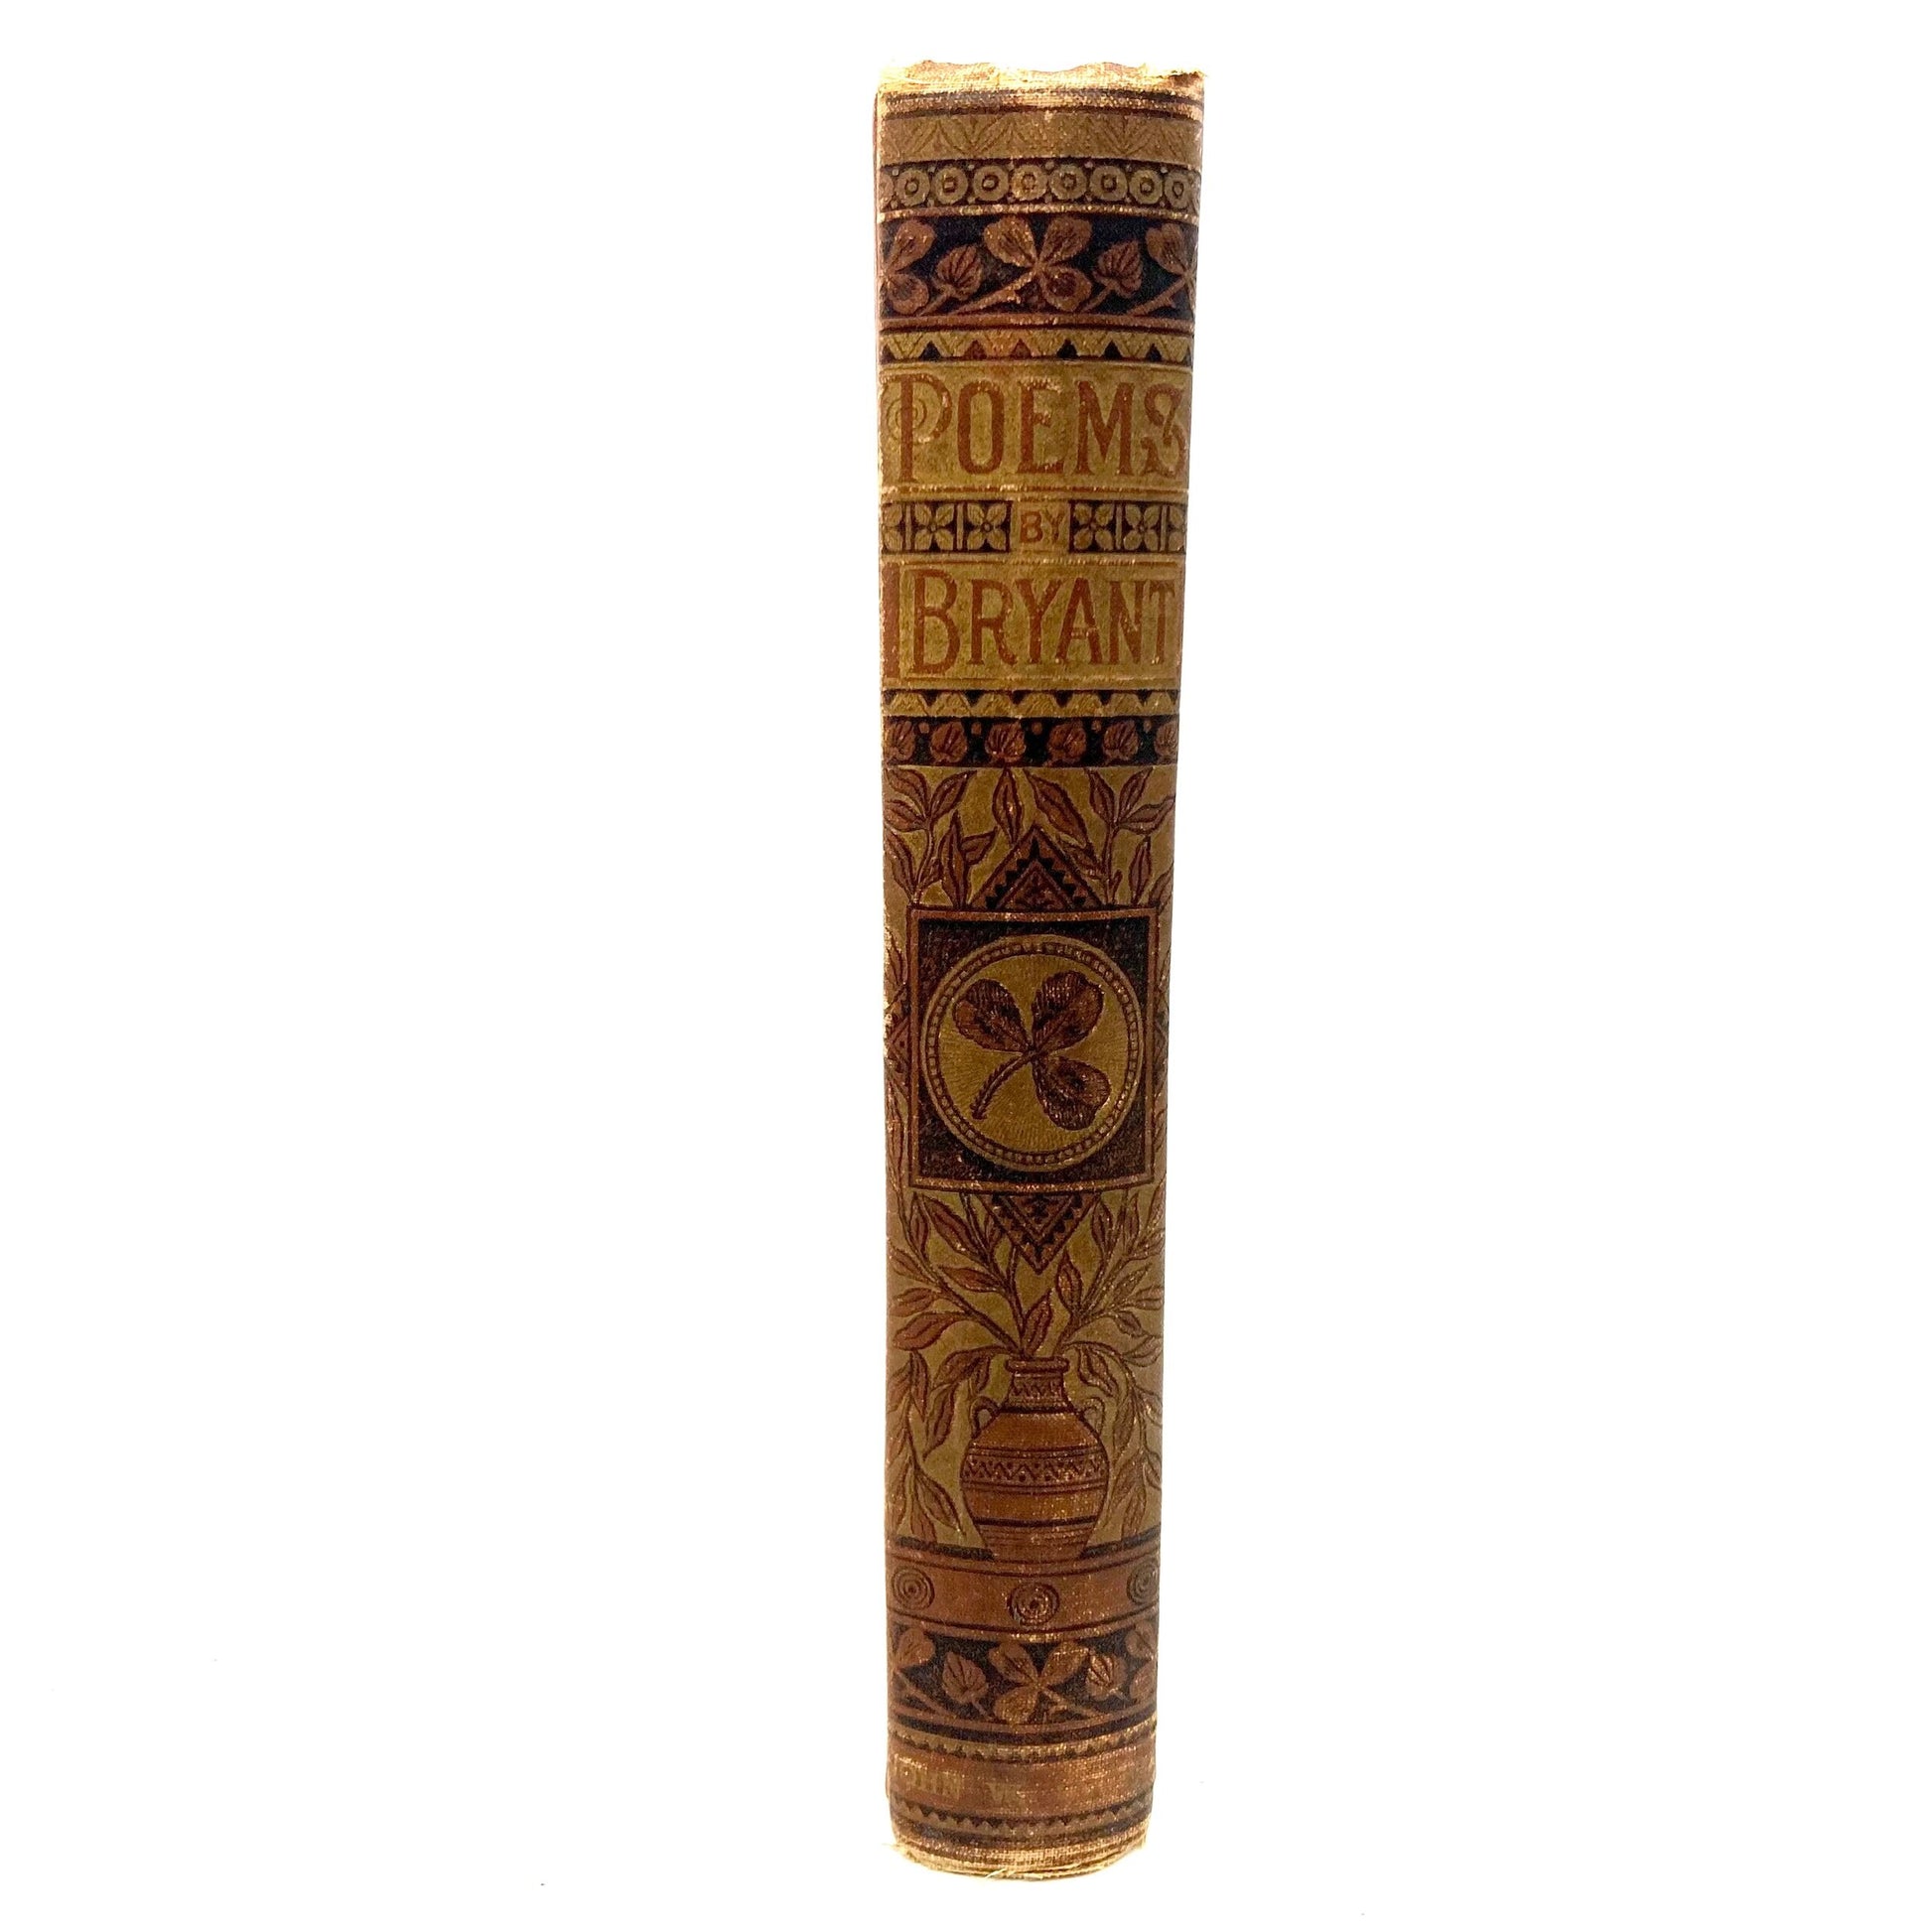 BRYANT, William Cullen "Poems" [John W. Lovell, c1880] - Buzz Bookstore